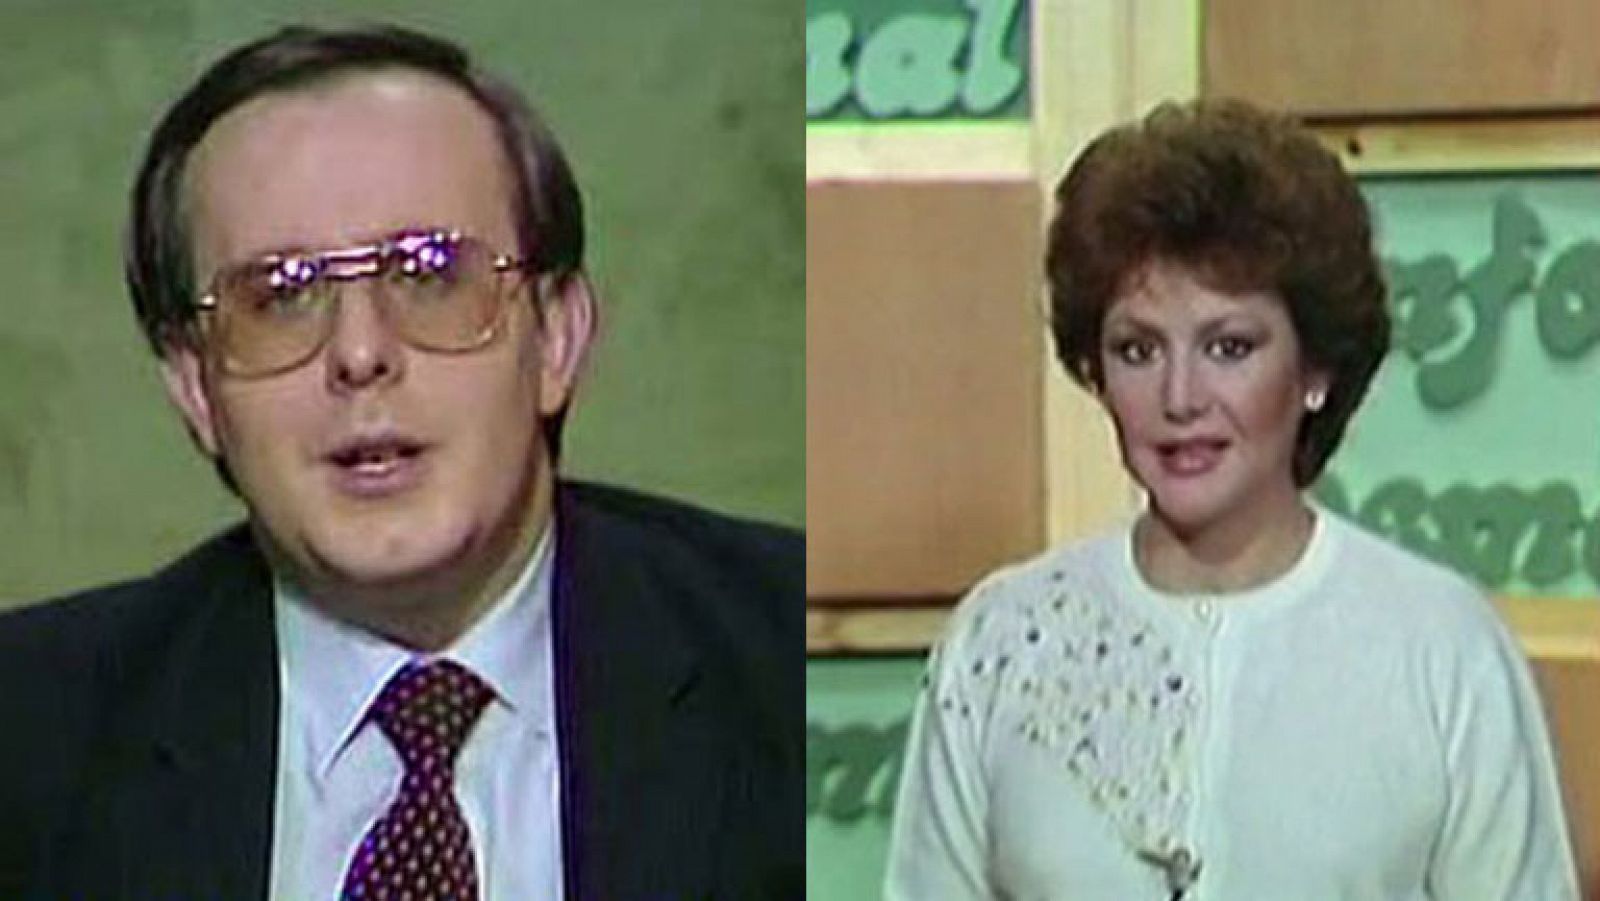 Presentadores Informe Semanal - Adela Cantalapiedra (1980-1981) y Ramón Colom (1981-1983)